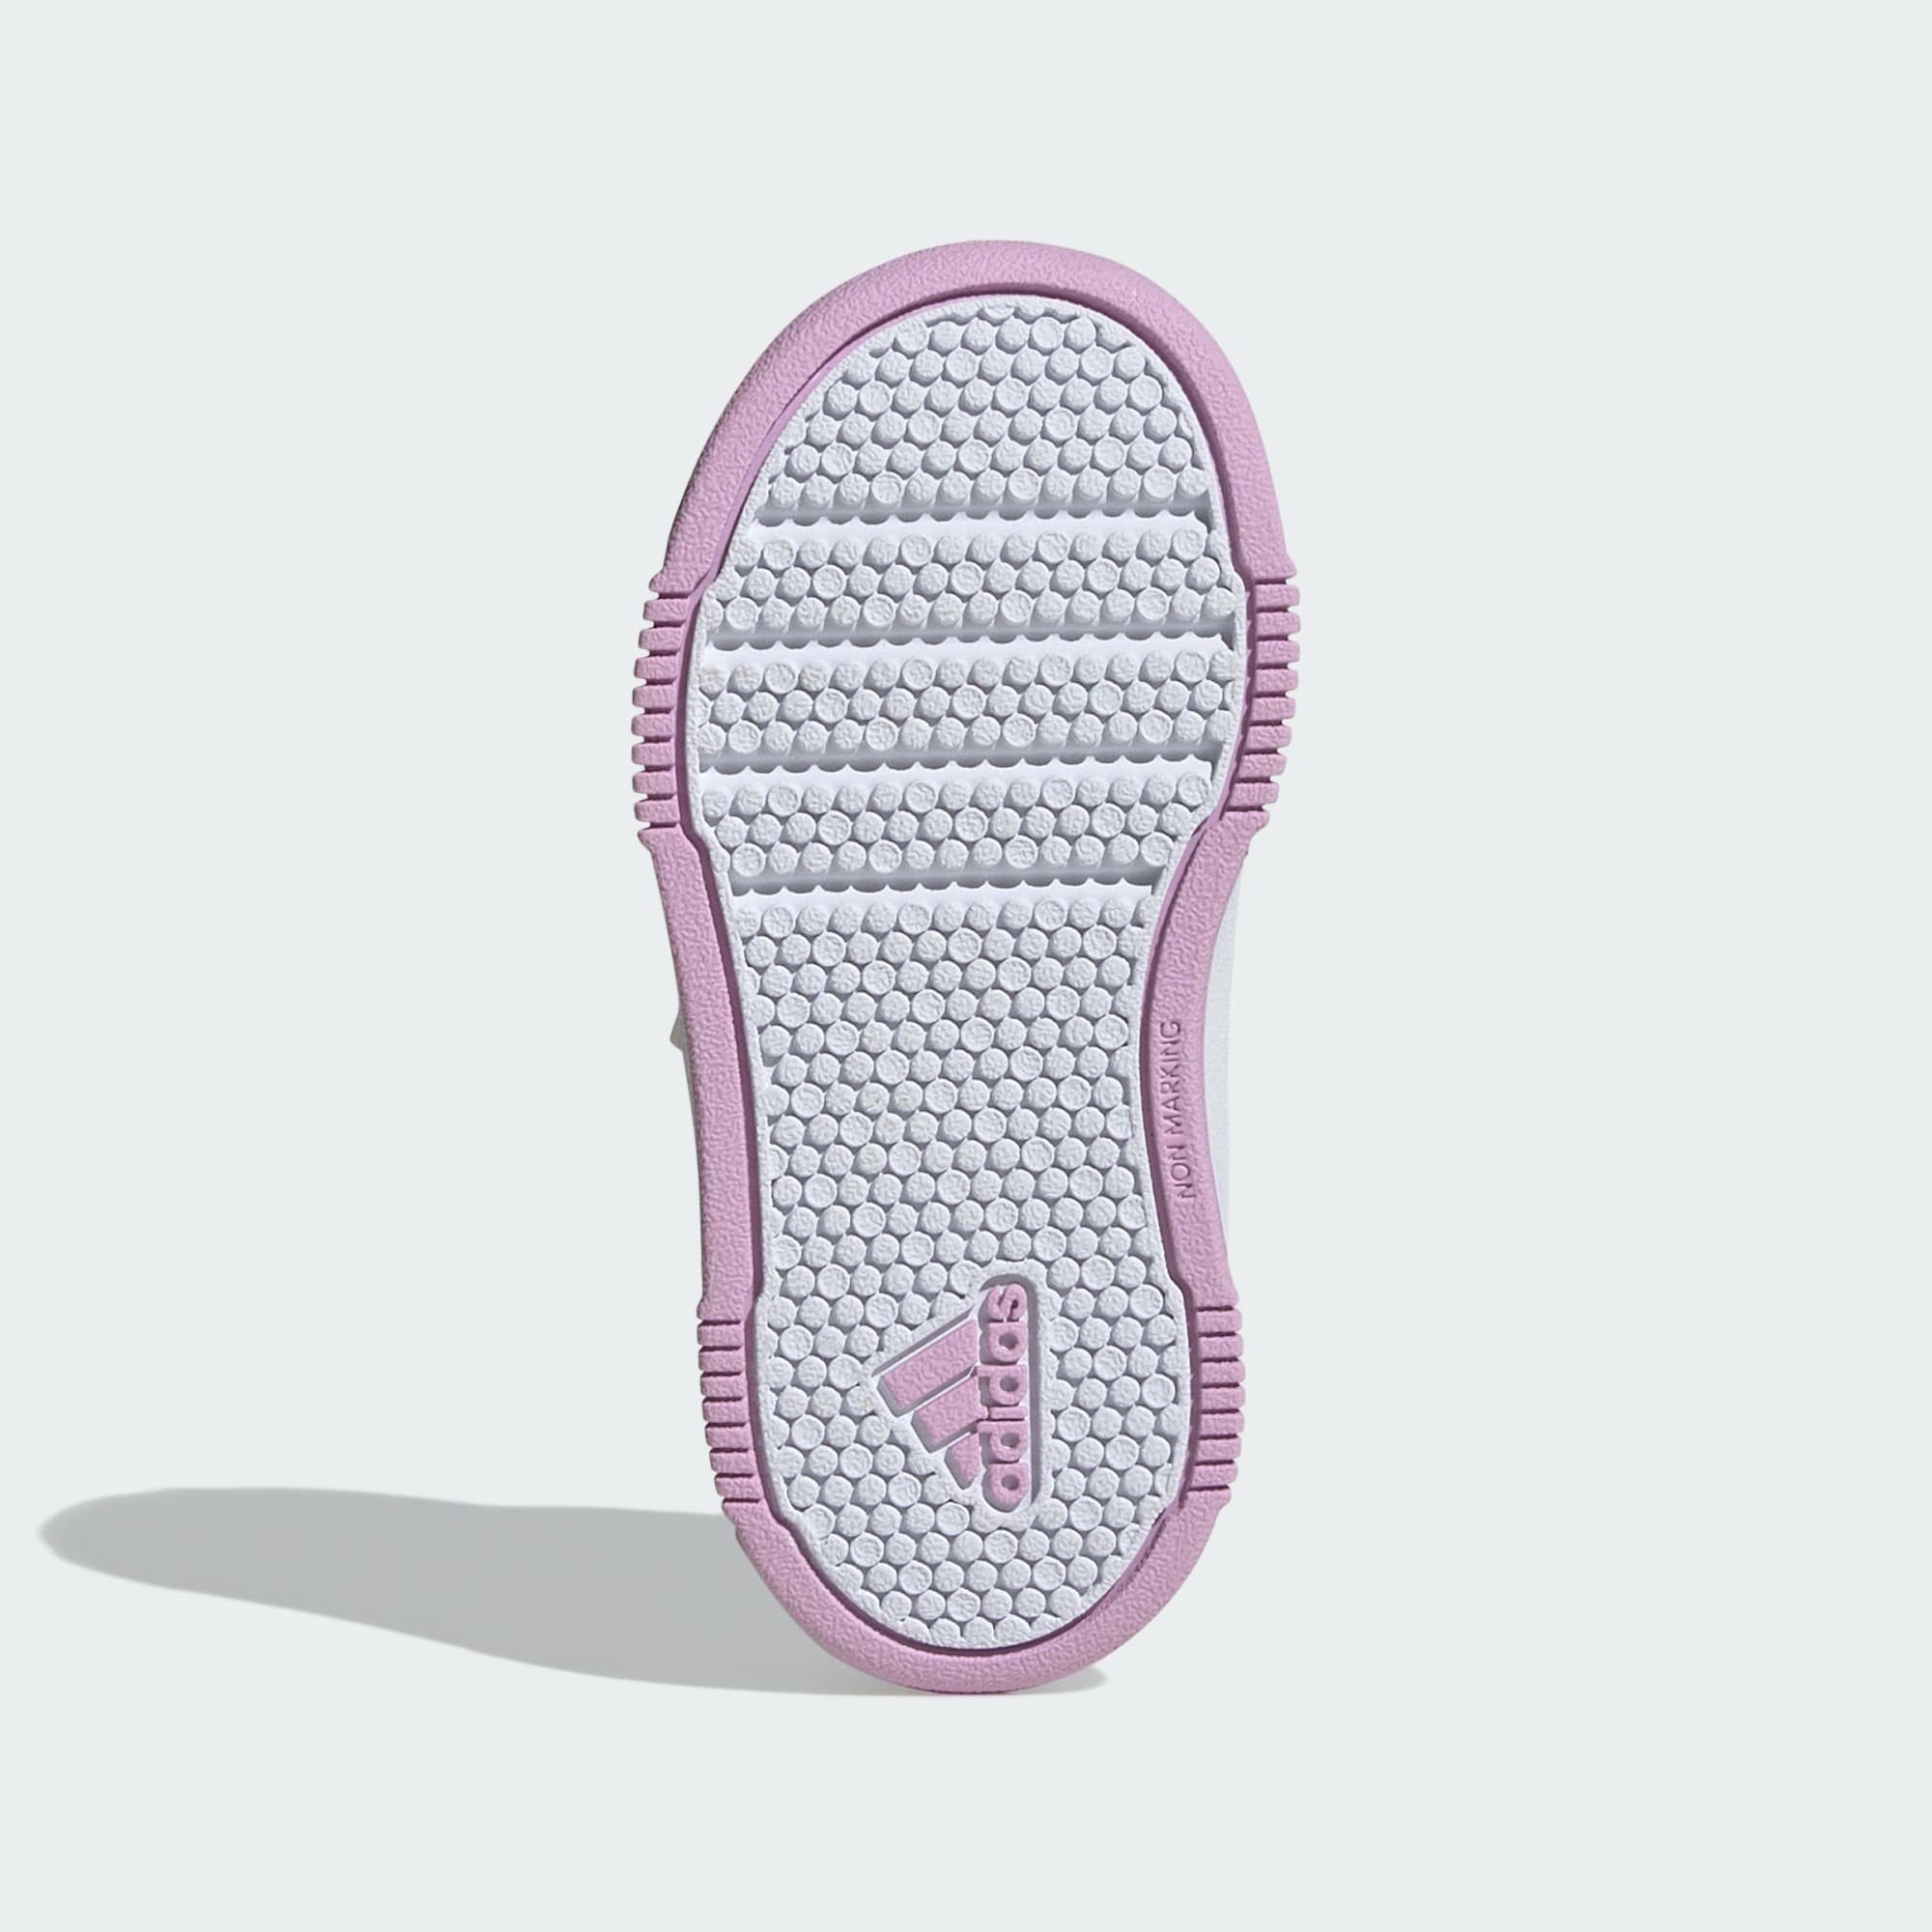 Chalk / Sneaker adidas LOOP Sportswear AND Lilac White / Aqua Semi SCHUH HOOK Flash TENSAUR Bliss